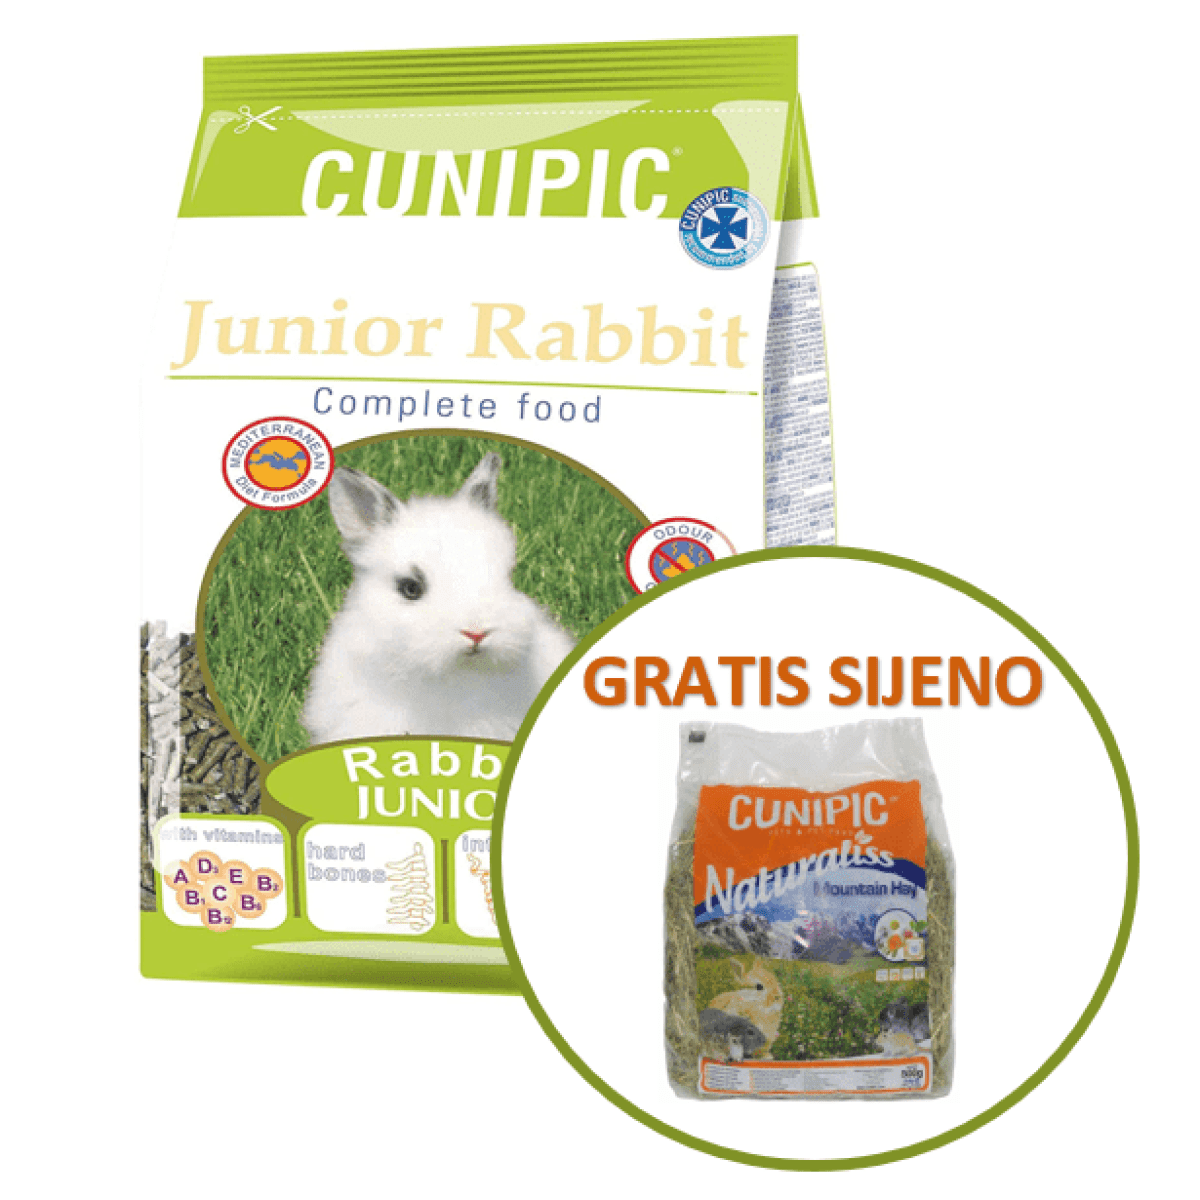 Cunipic Junior Rabbit, hrana za mladog kunića 3kg + Naturaliss sijeno 500g GRATIS